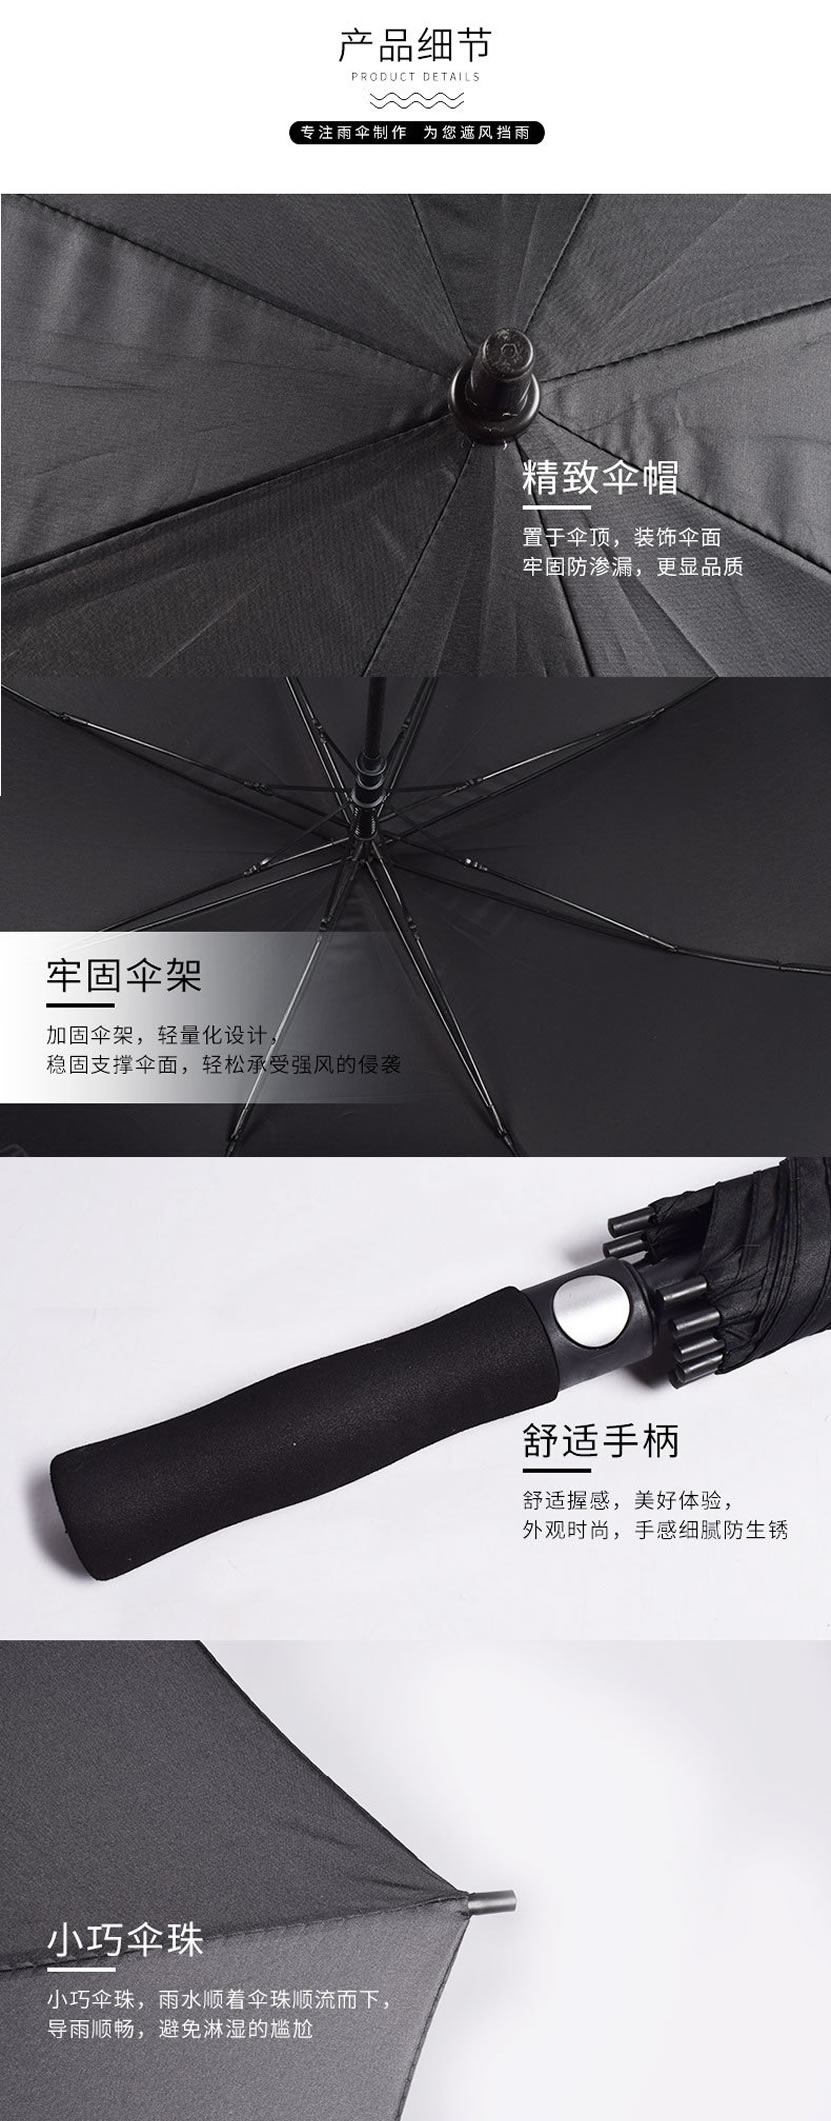 Golf umbrella detail view